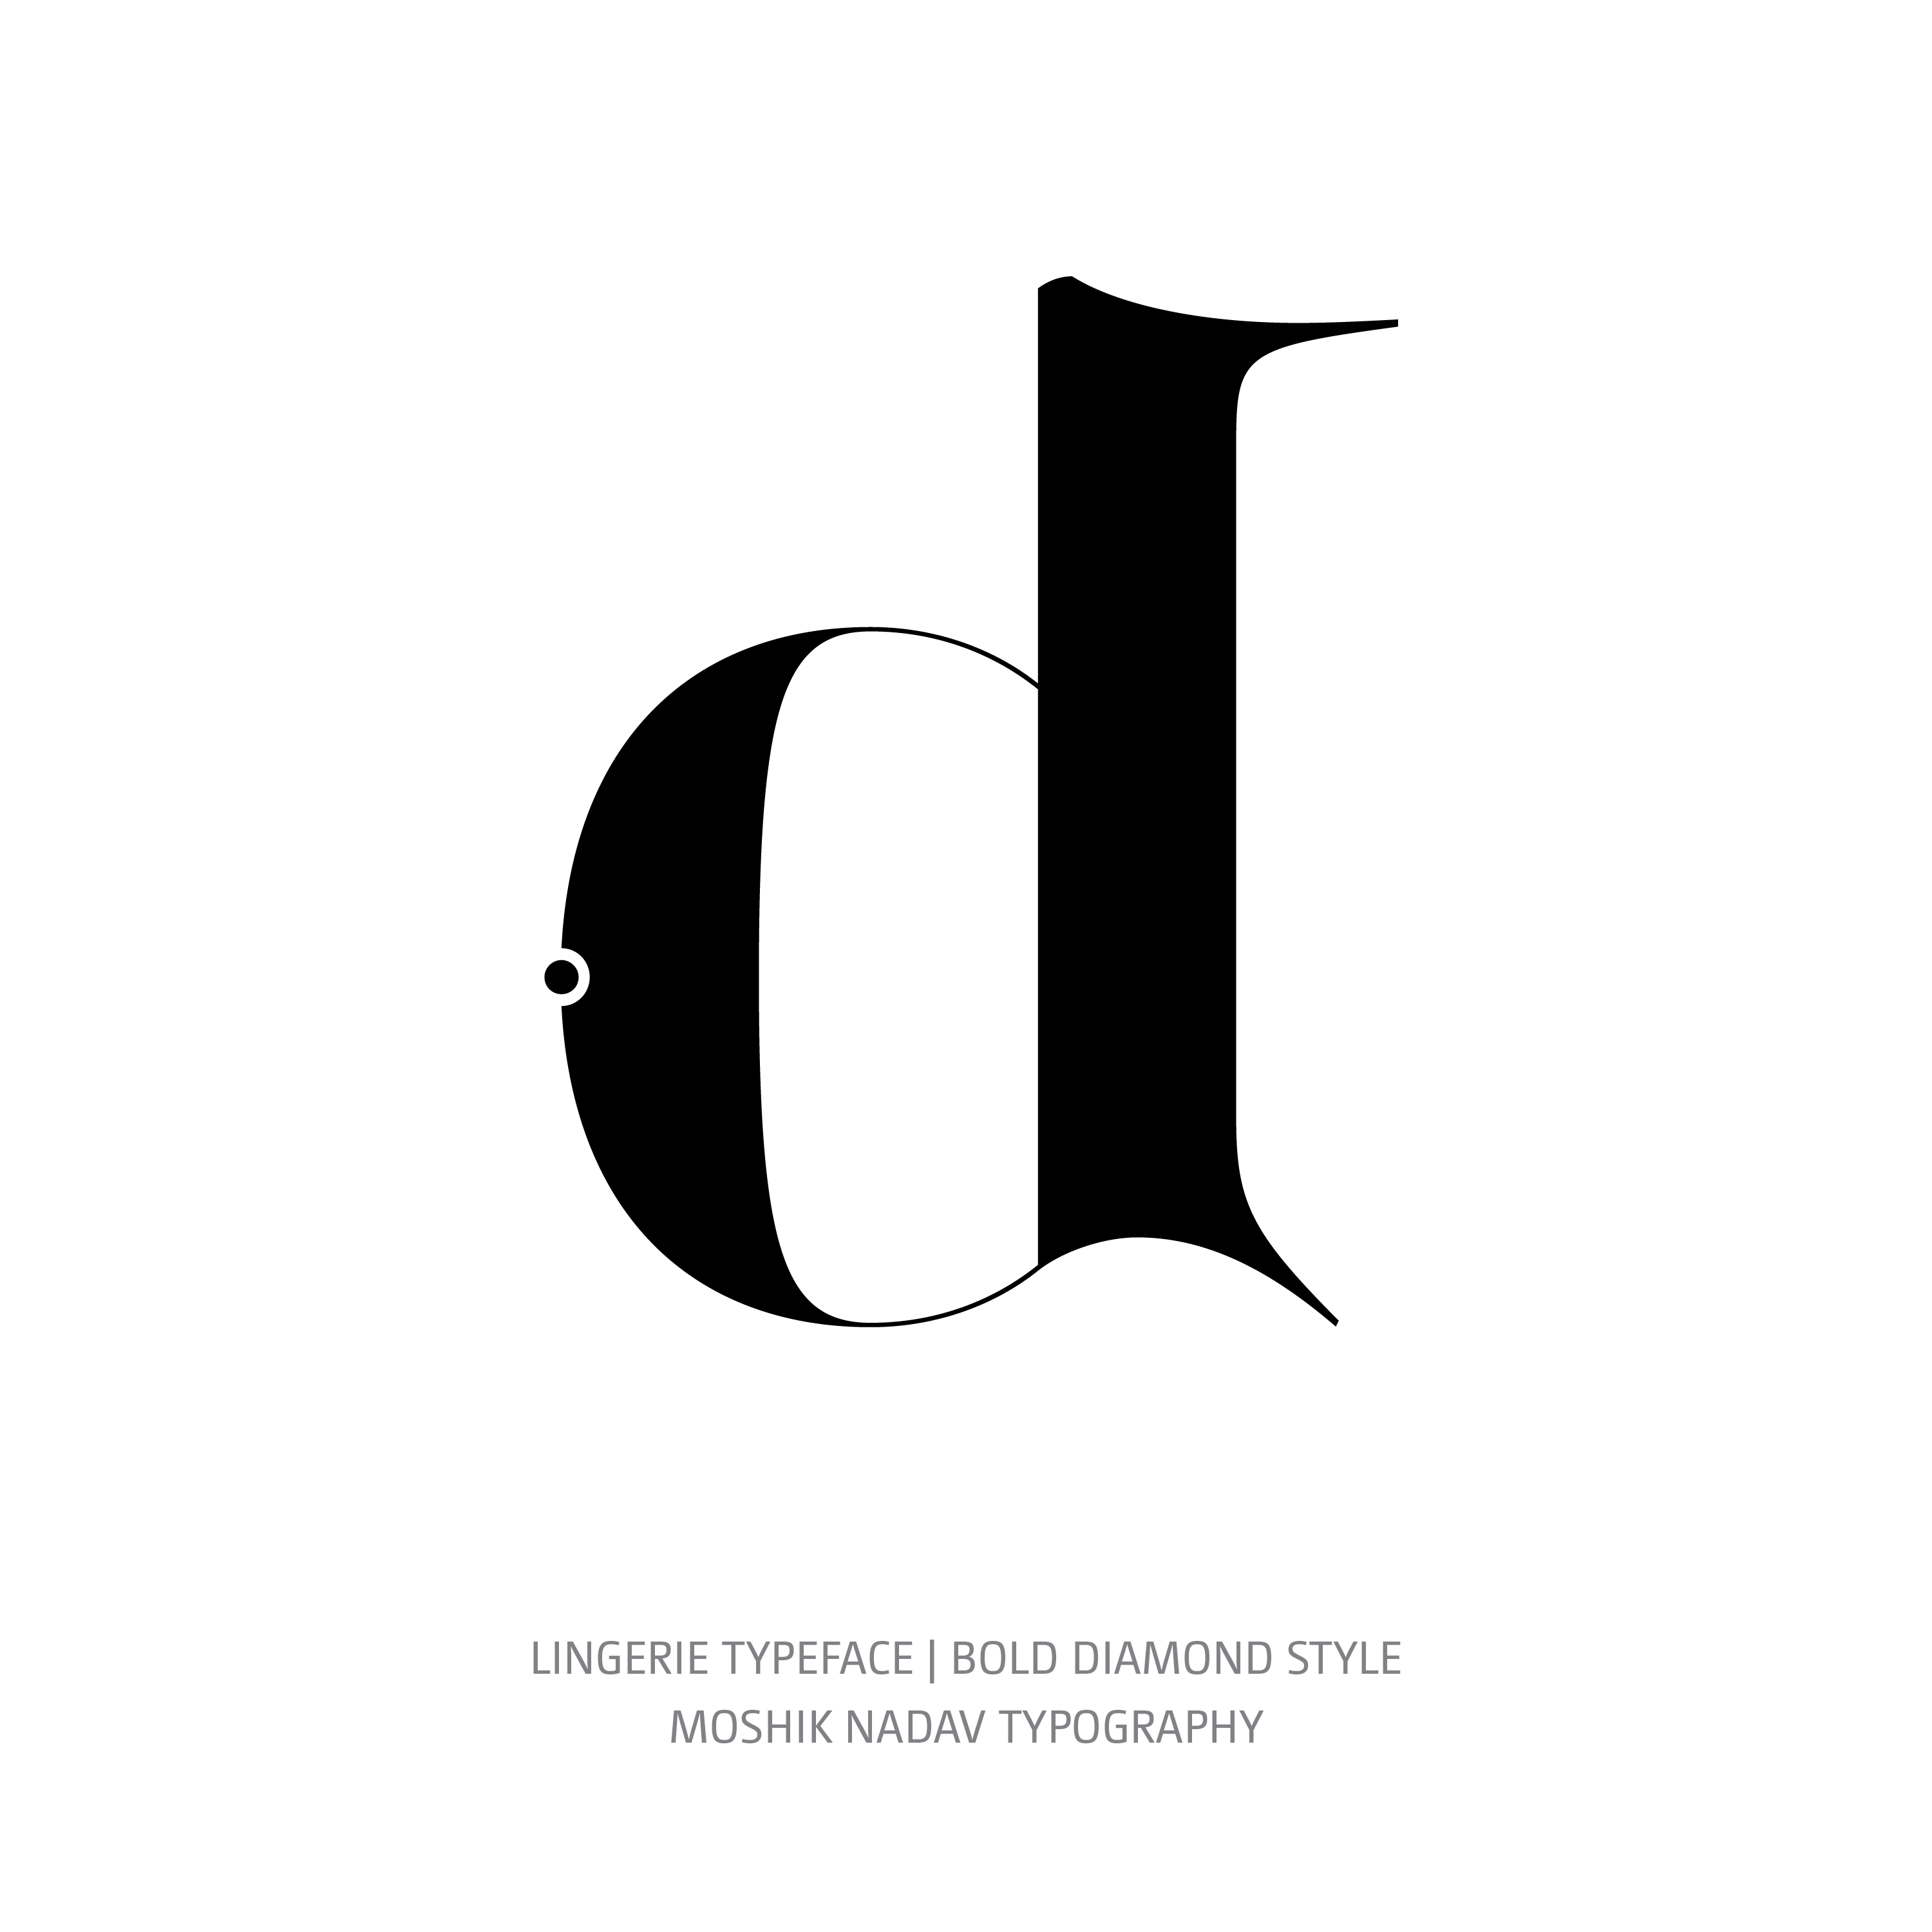 Lingerie Typeface Bold Diamond d